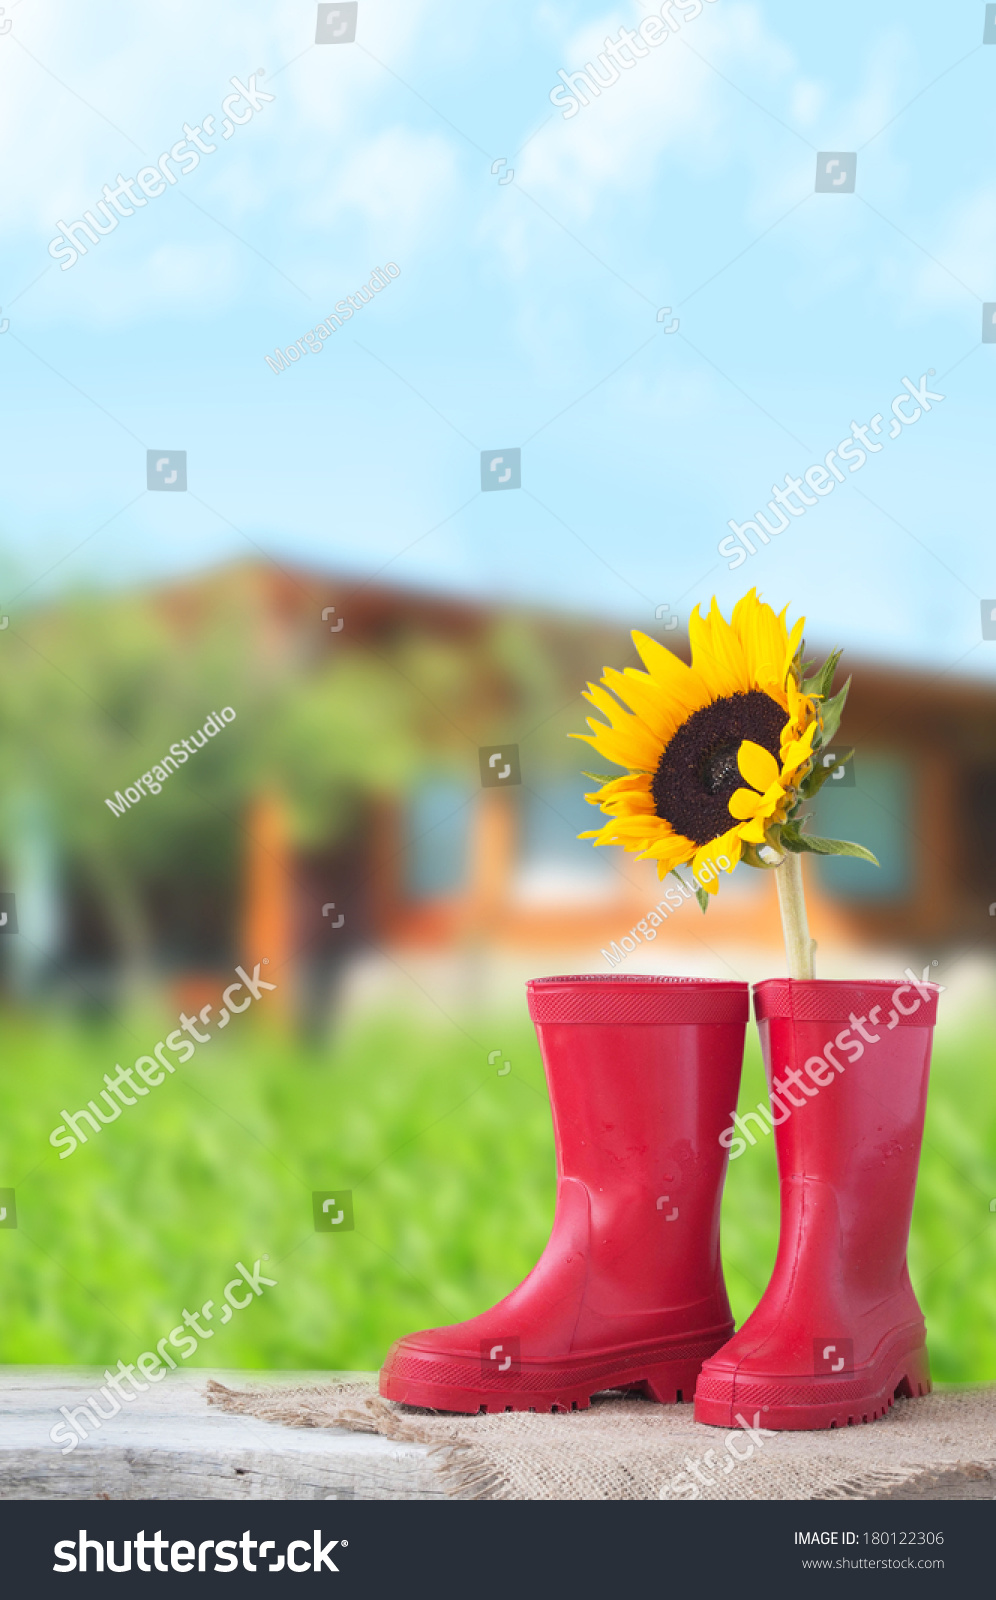 sunflower rain boots